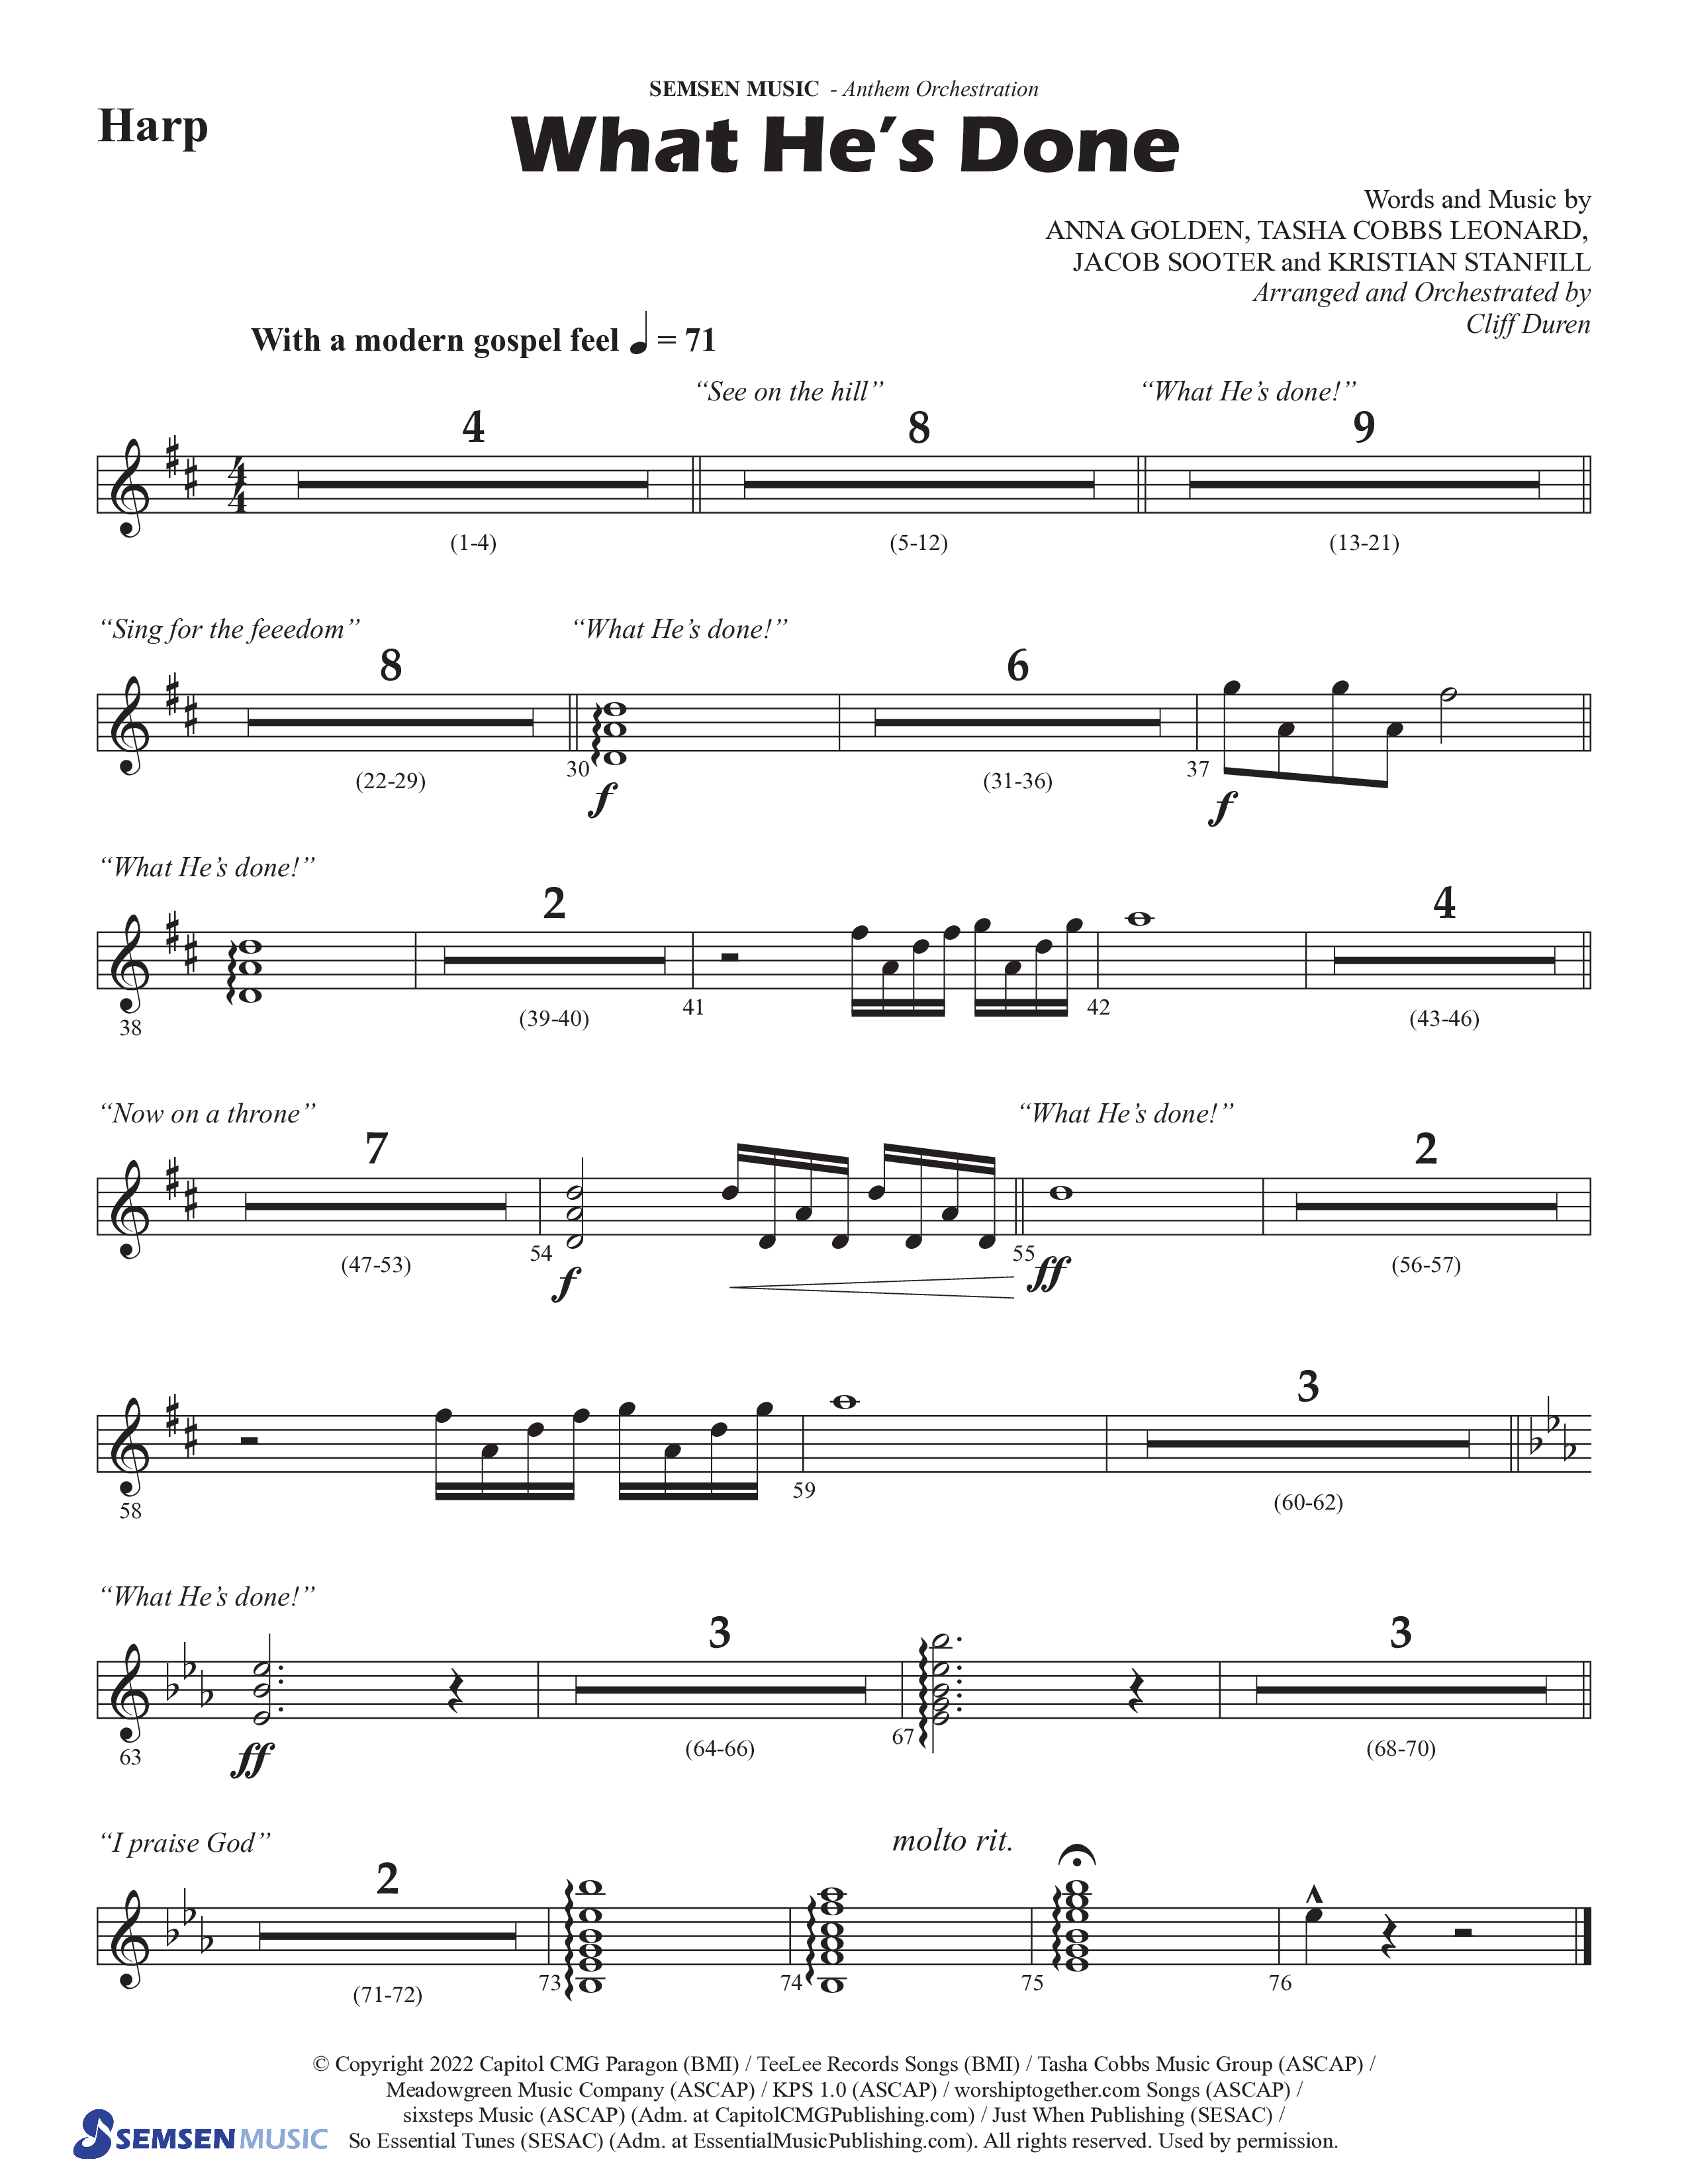 What He's Done (Choral Anthem SATB) Harp (Semsen Music / Arr. Cliff Duren)